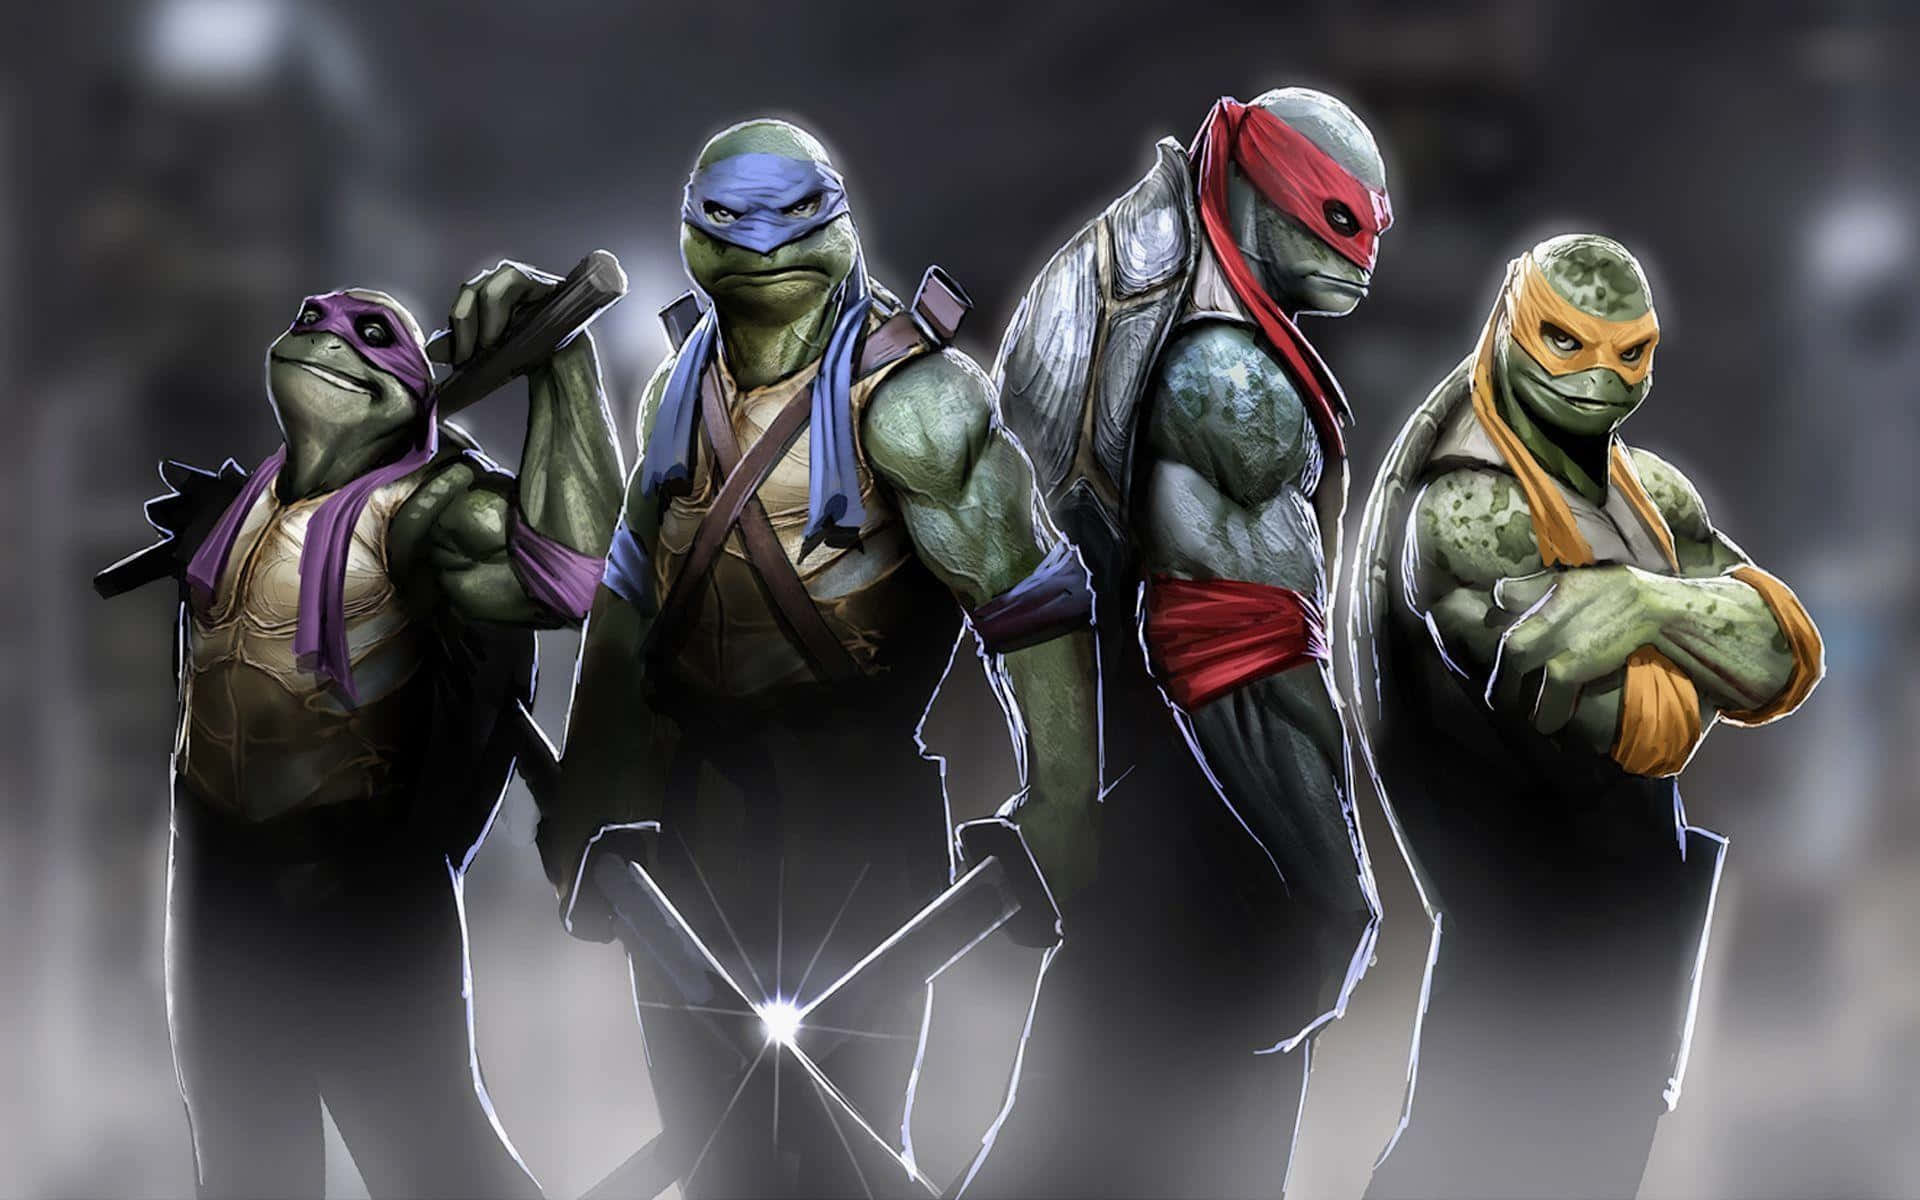 4er Bedre End 1 - De 4 Teenage Mutant Ninja Turtles